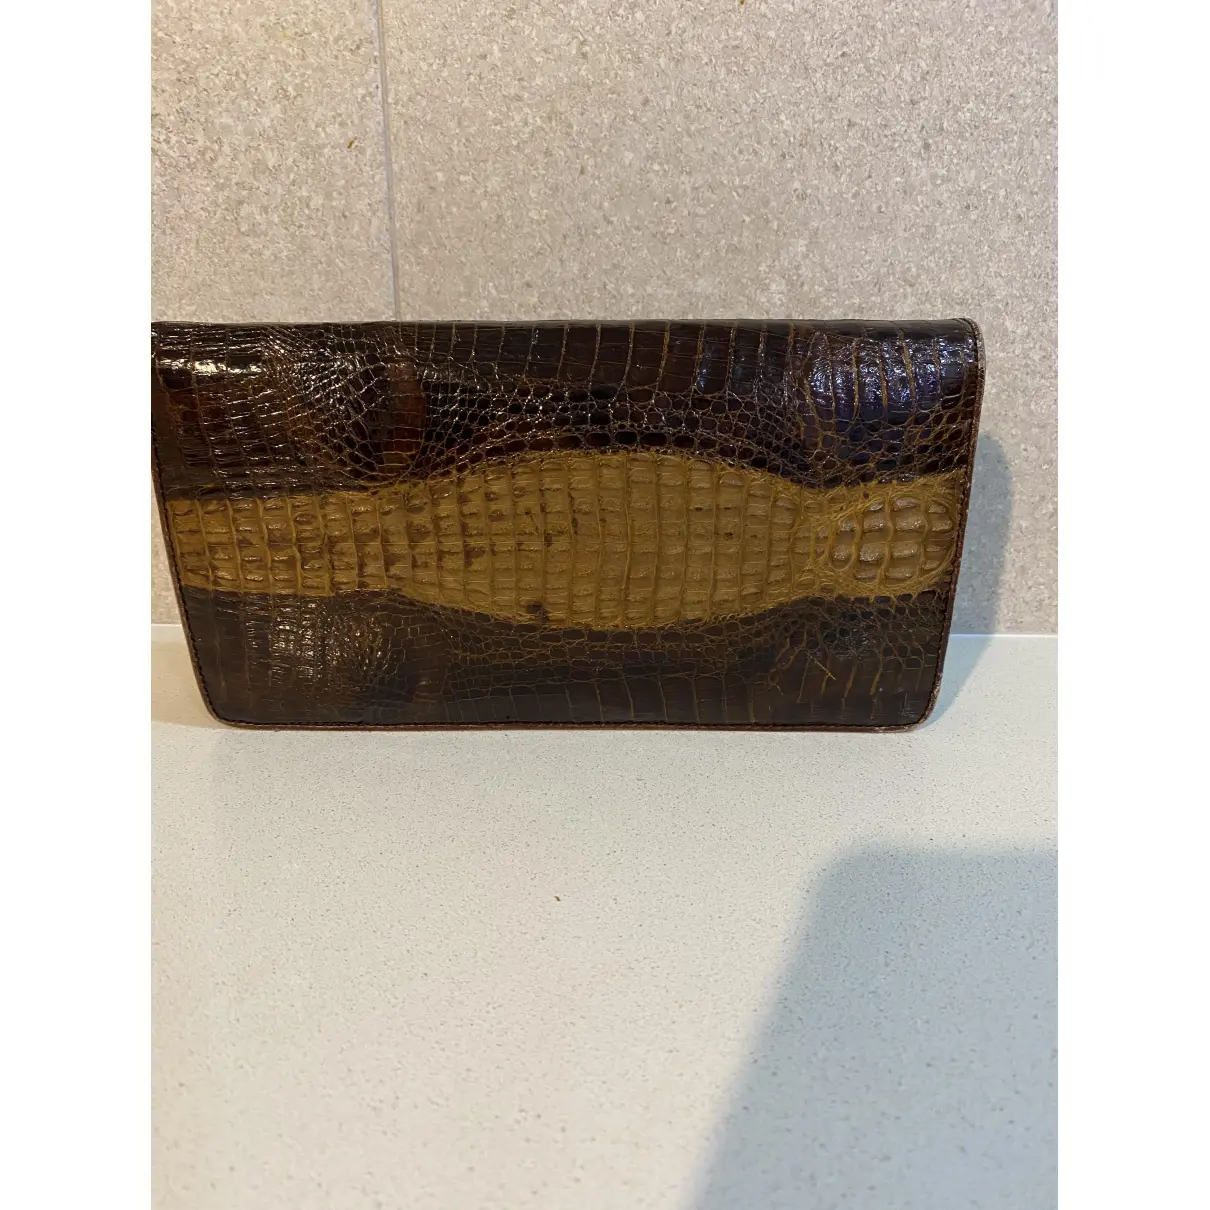 Buy Non Signé / Unsigned Alligator handbag online